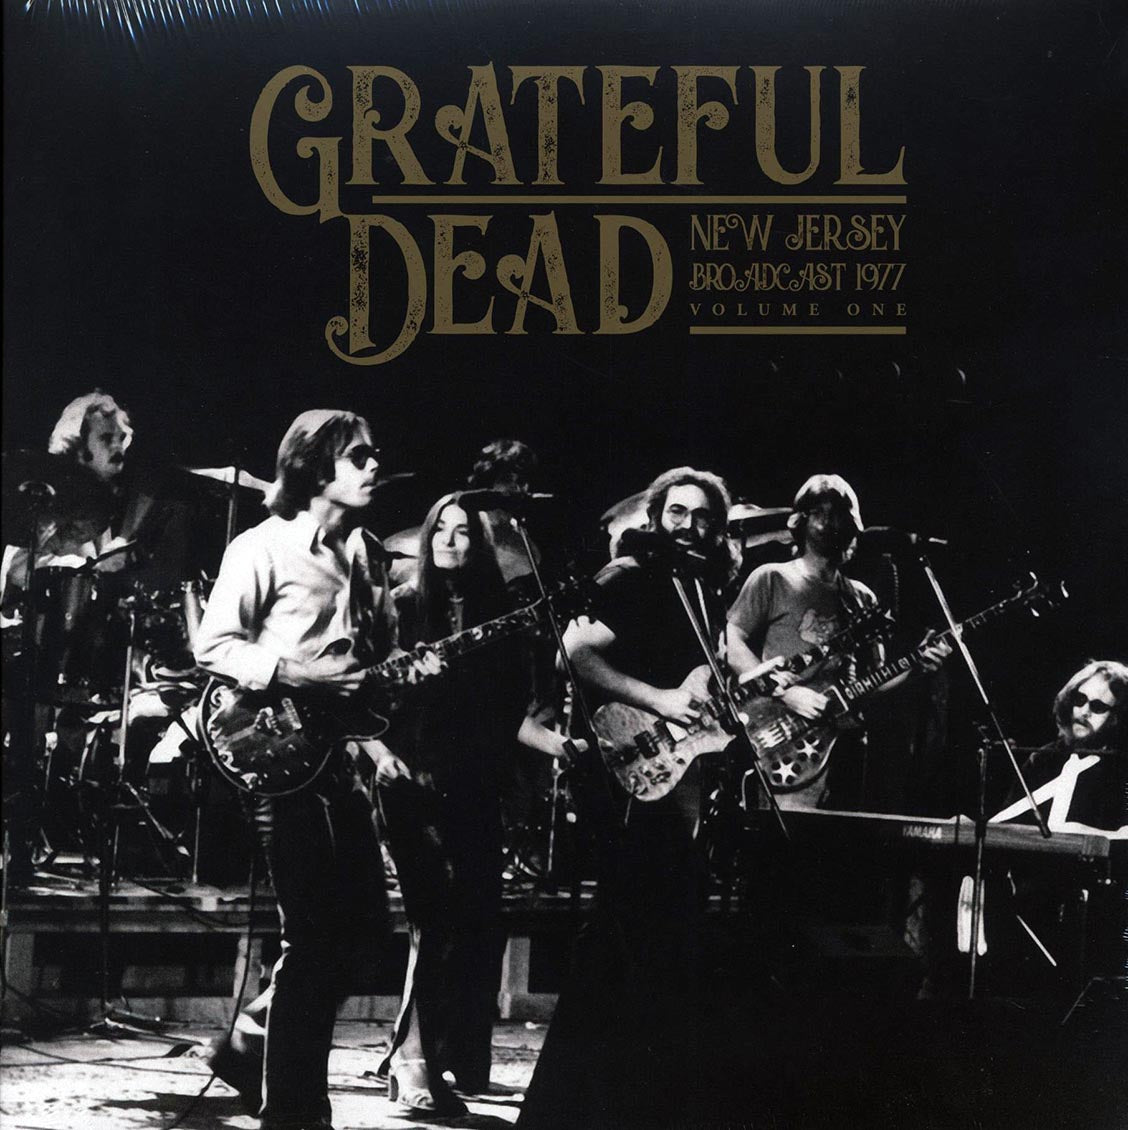 Grateful Dead - New Jersey Broadcast 1977 Volume 1 (ltd. ed.) (2xLP) - Vinyl LP